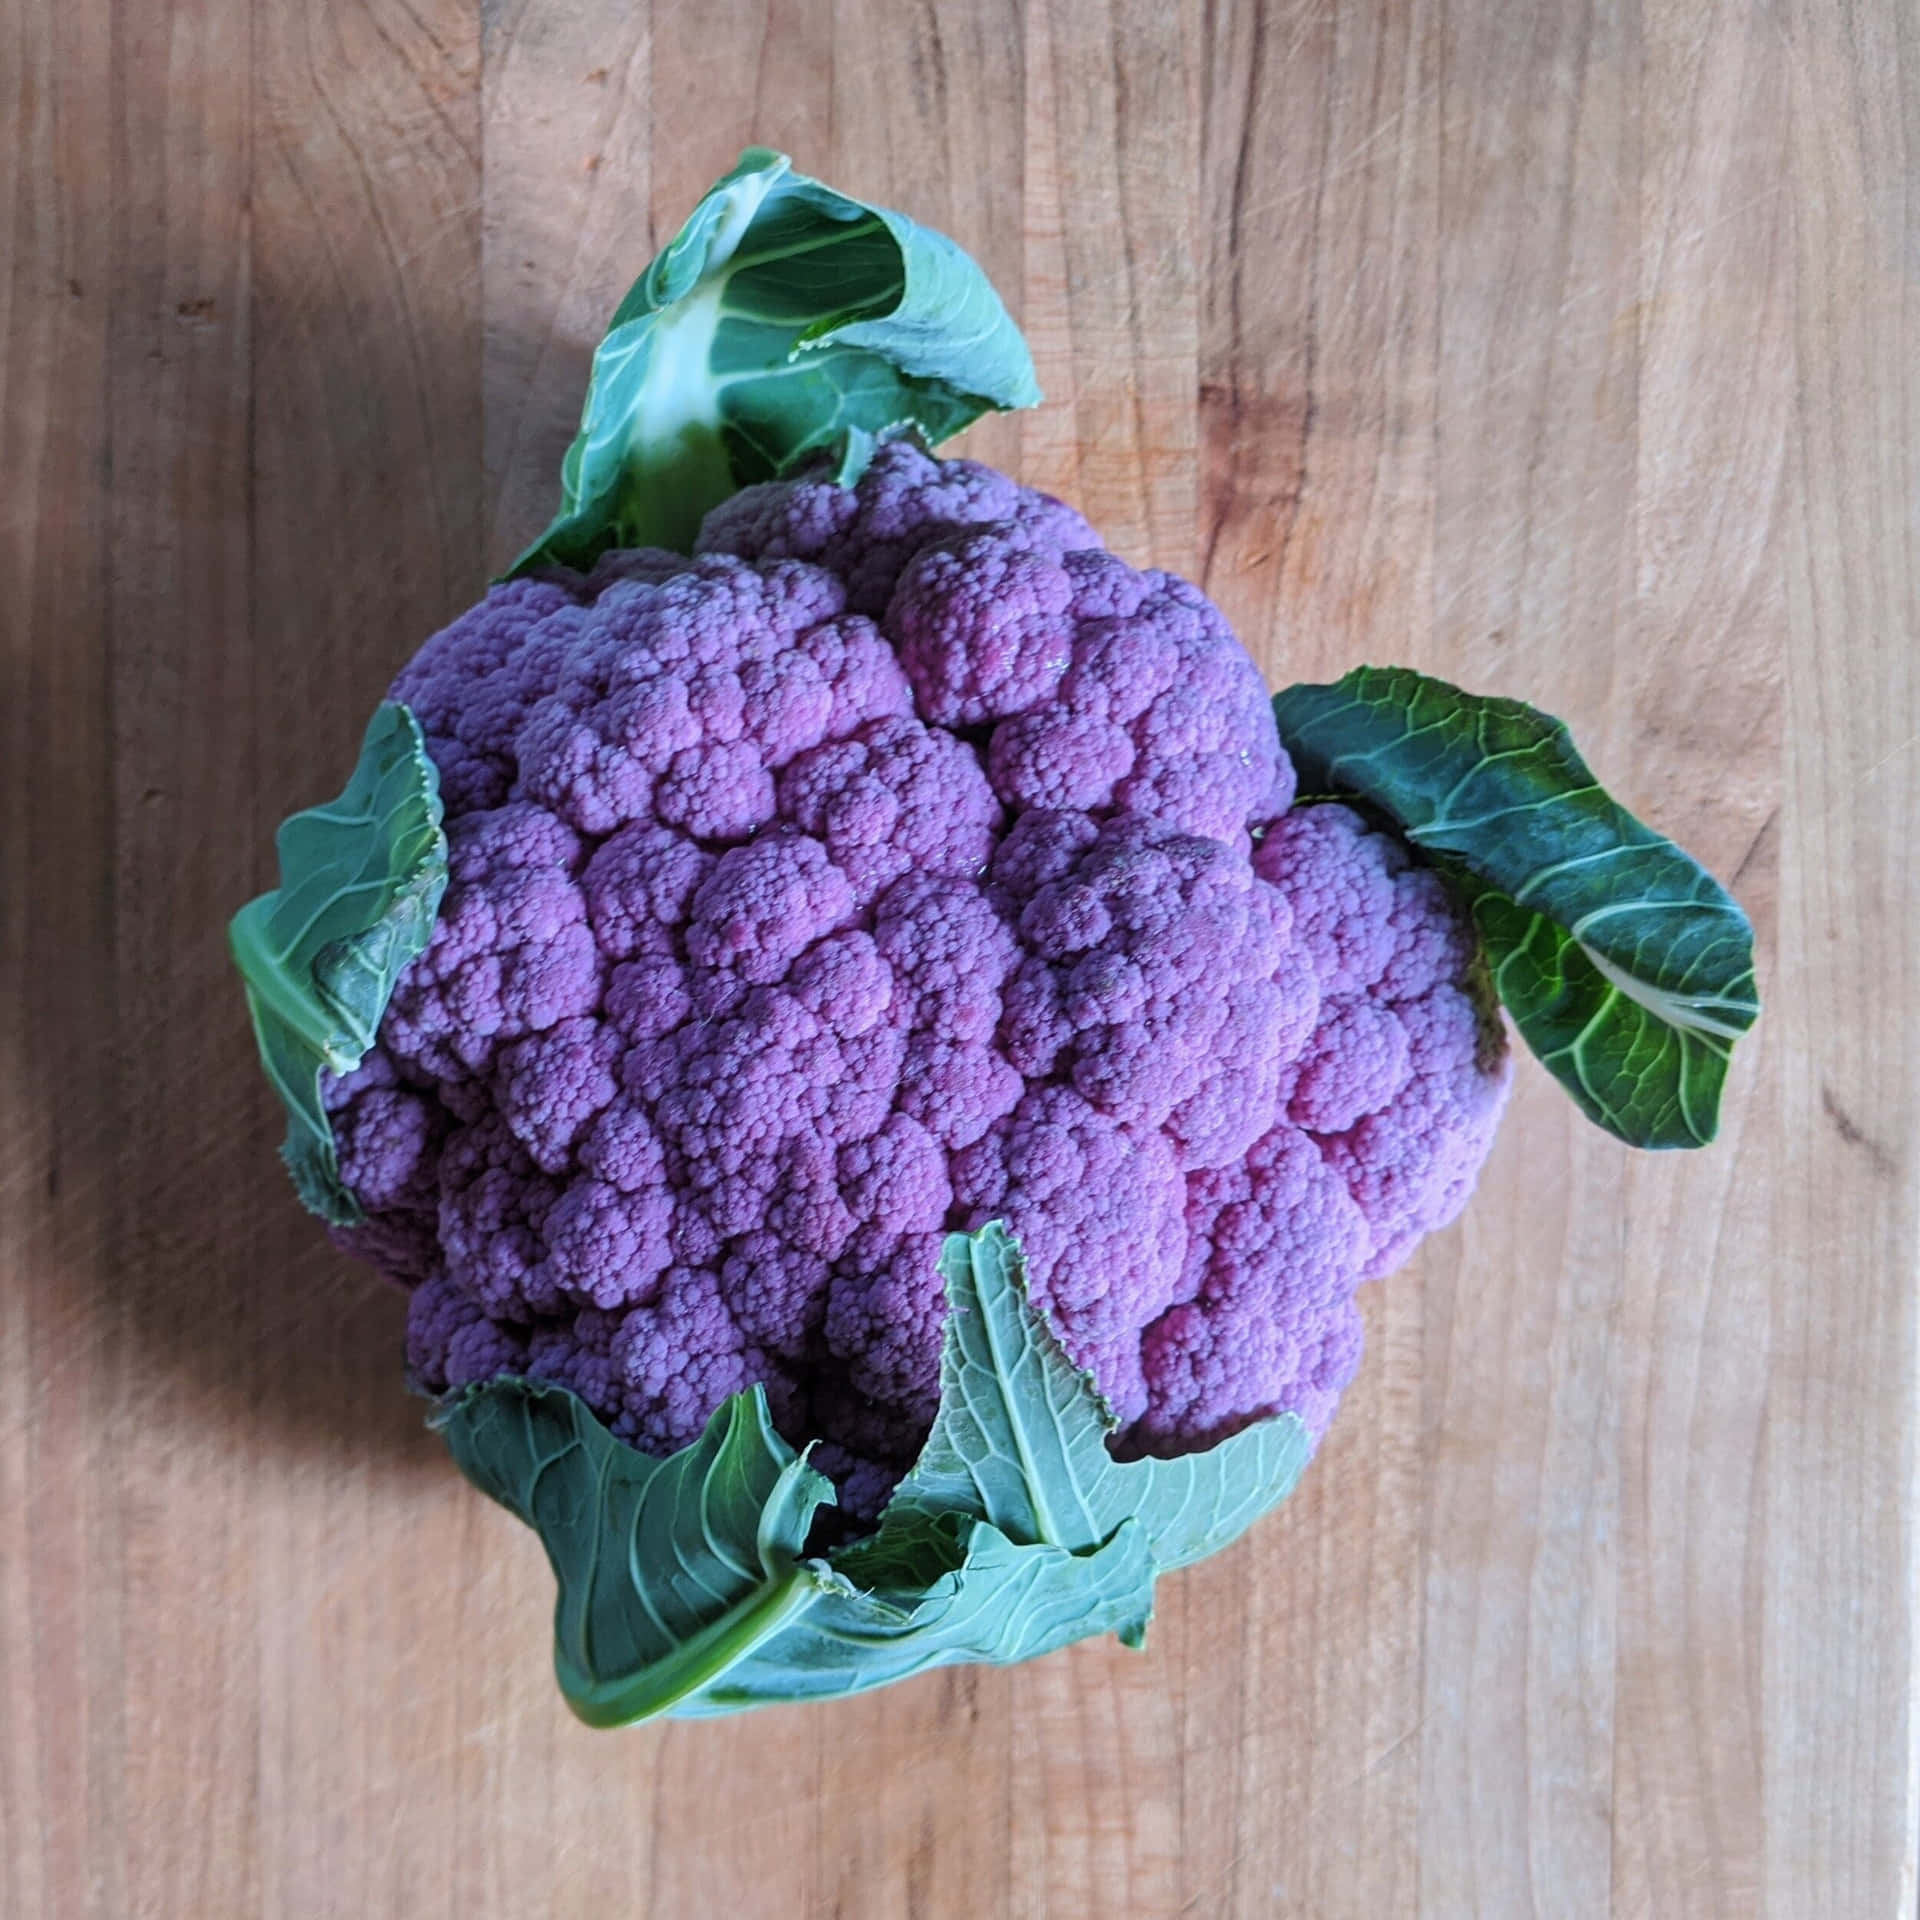 A Colorful Culinary Treat - Purple Cauliflower Wallpaper